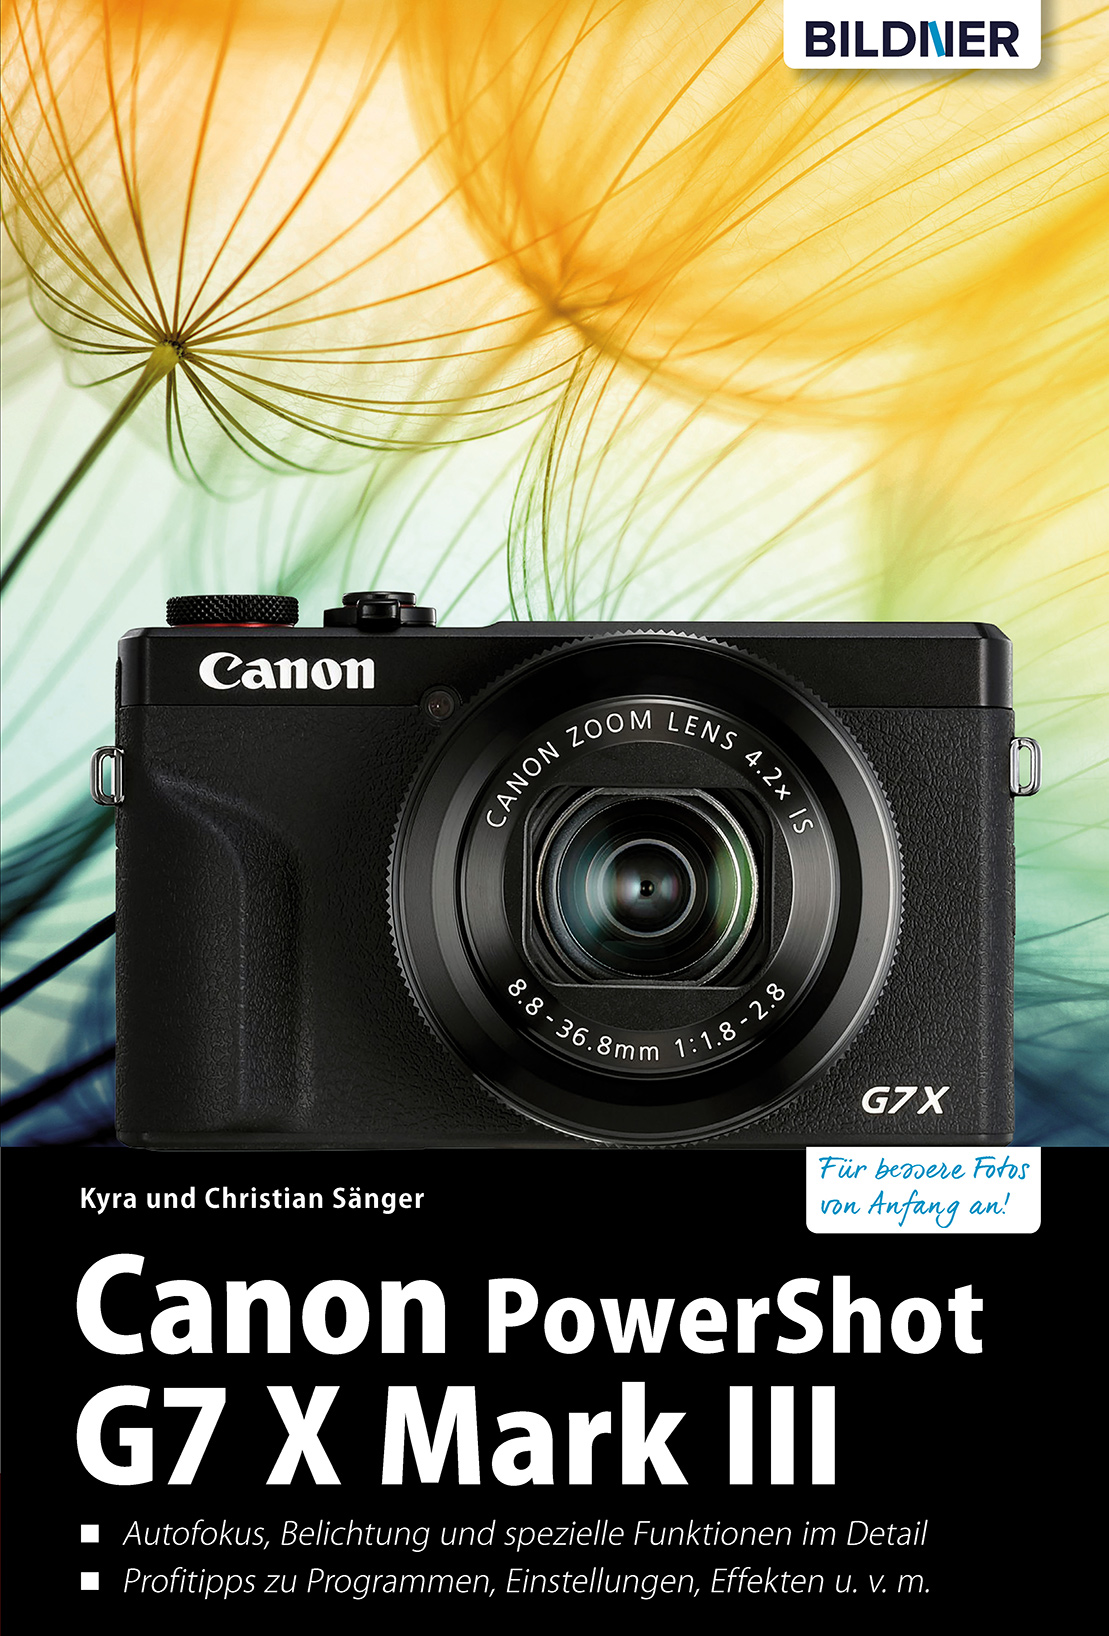 Canon PowerShot G7 X Mark III | BILDNER Verlag GmbH | Buchverlag in Passau